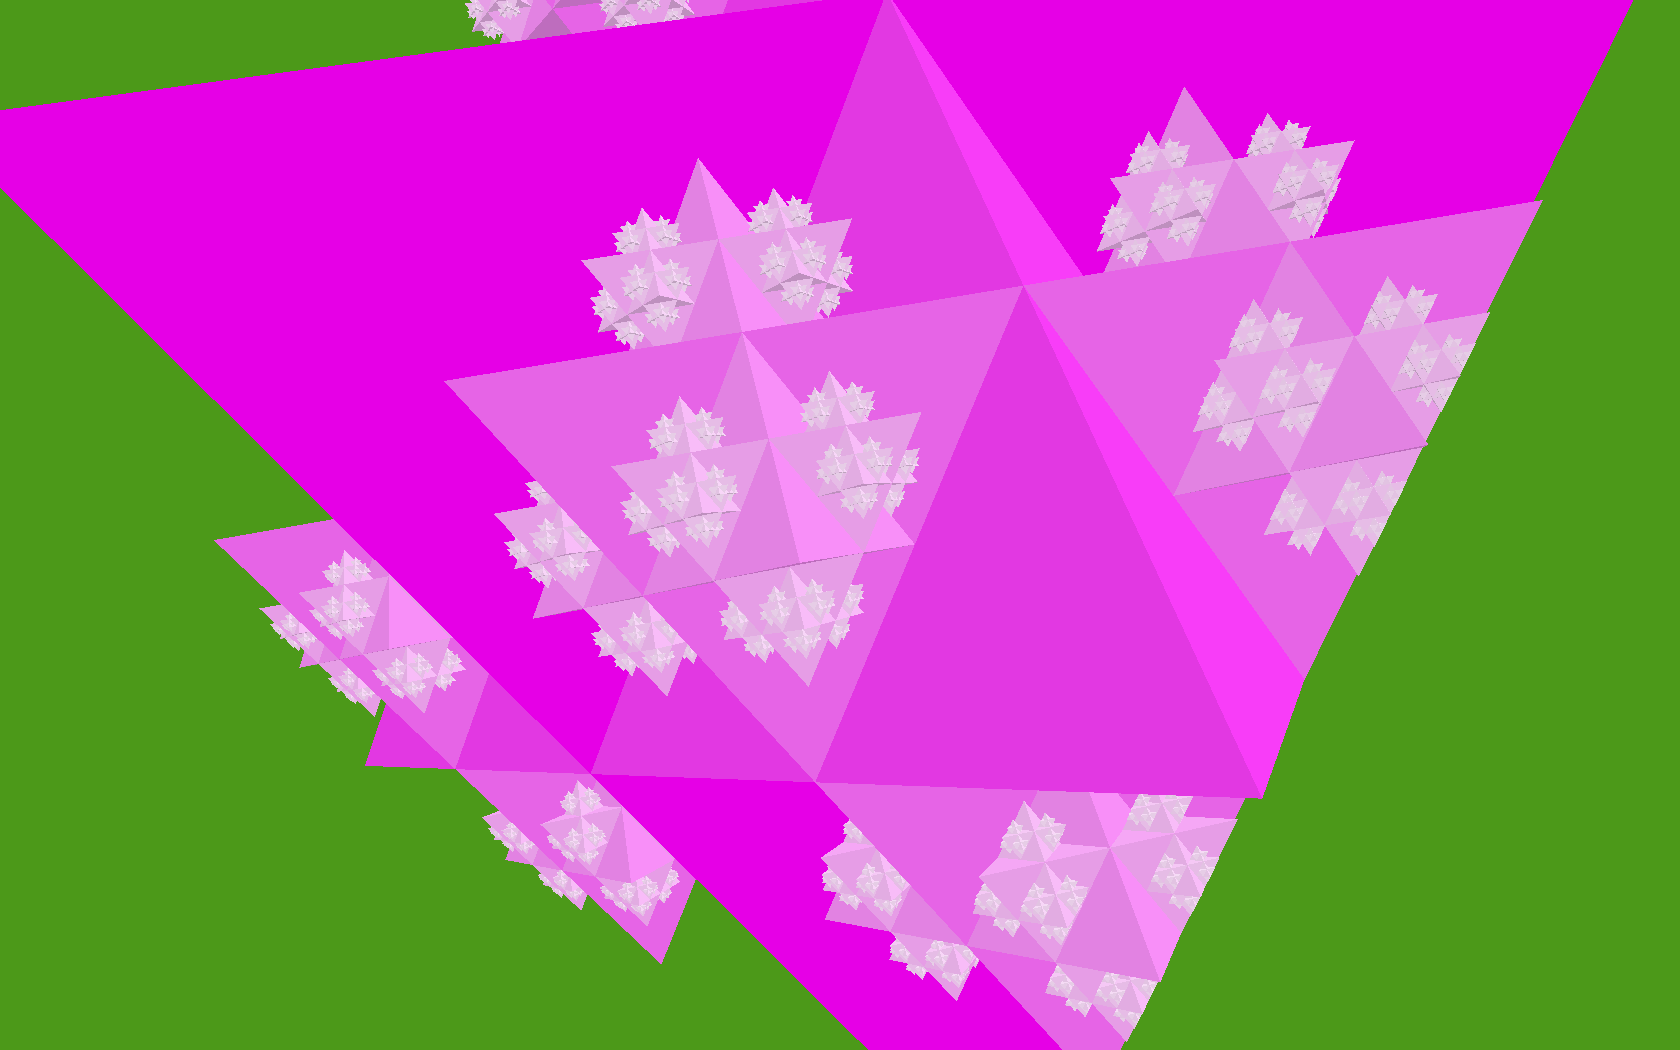 A Koch tetrahedron